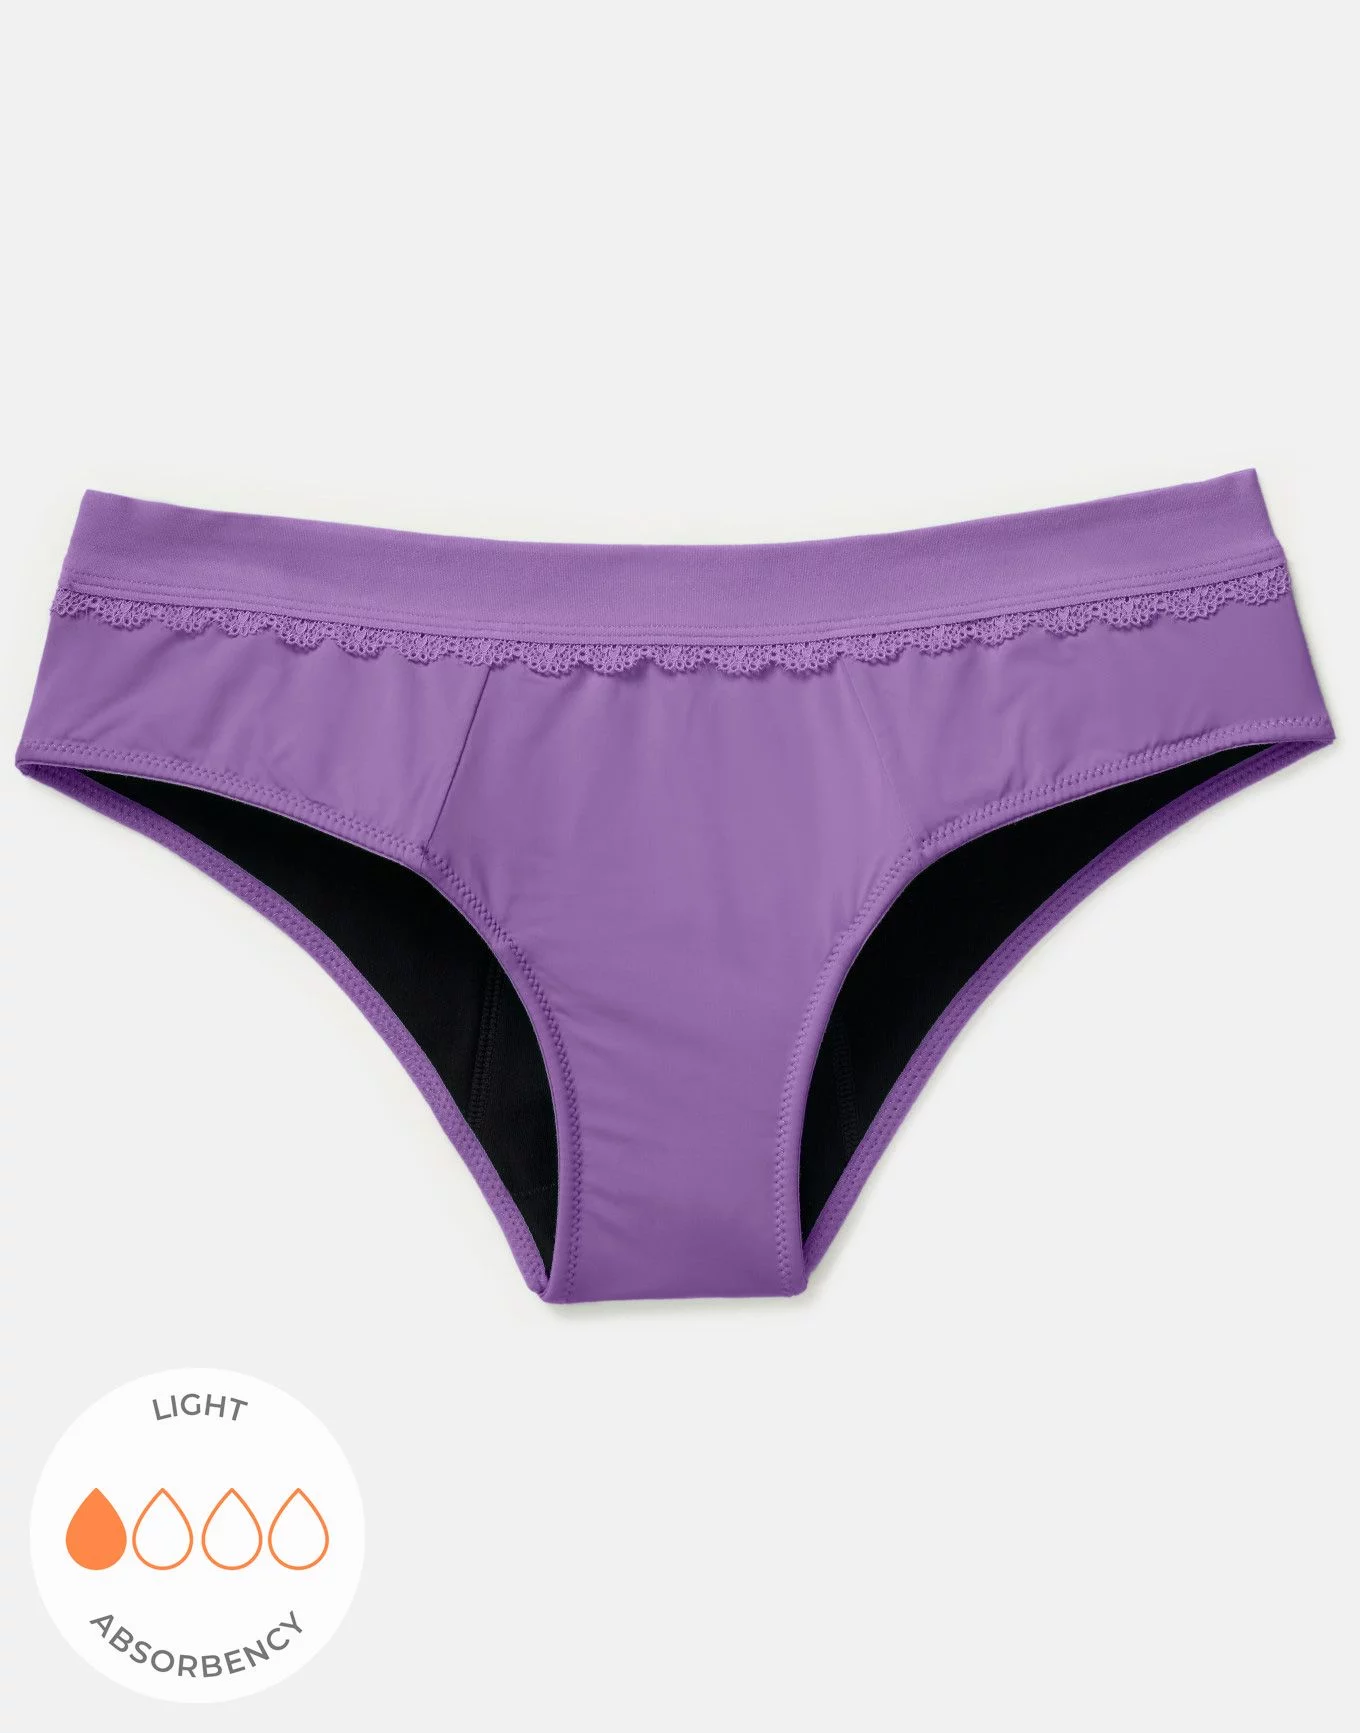 Period Panty Thong SEAMLESS in purple shop period underwear online